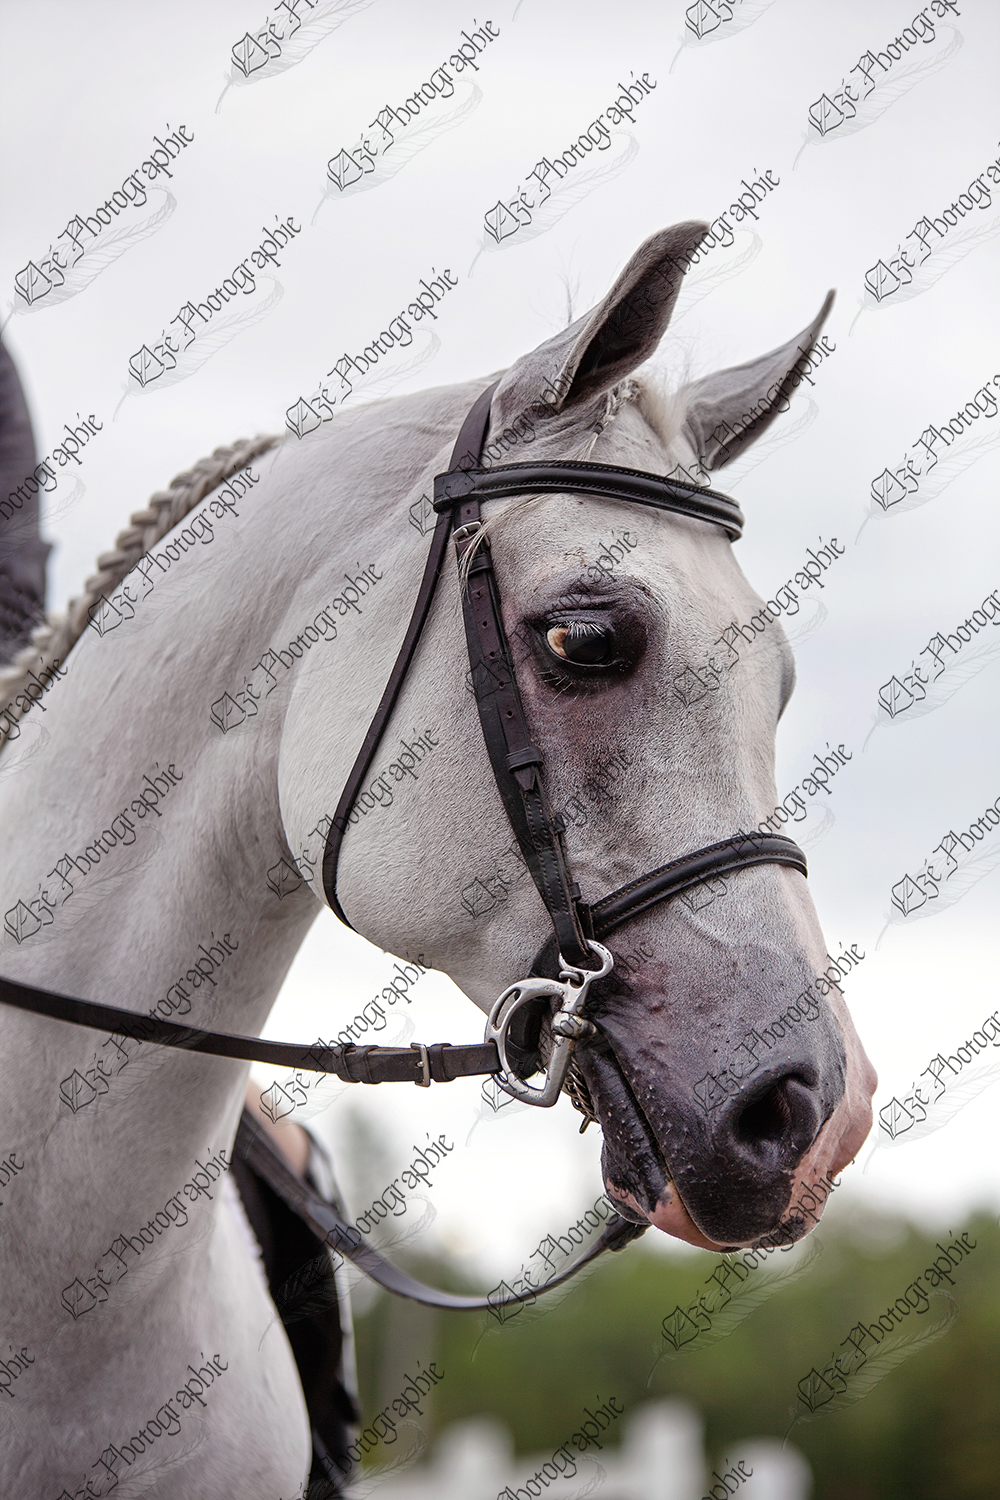 elze_photo_5947_tete_tresse_cheval_arabian_horse_harness